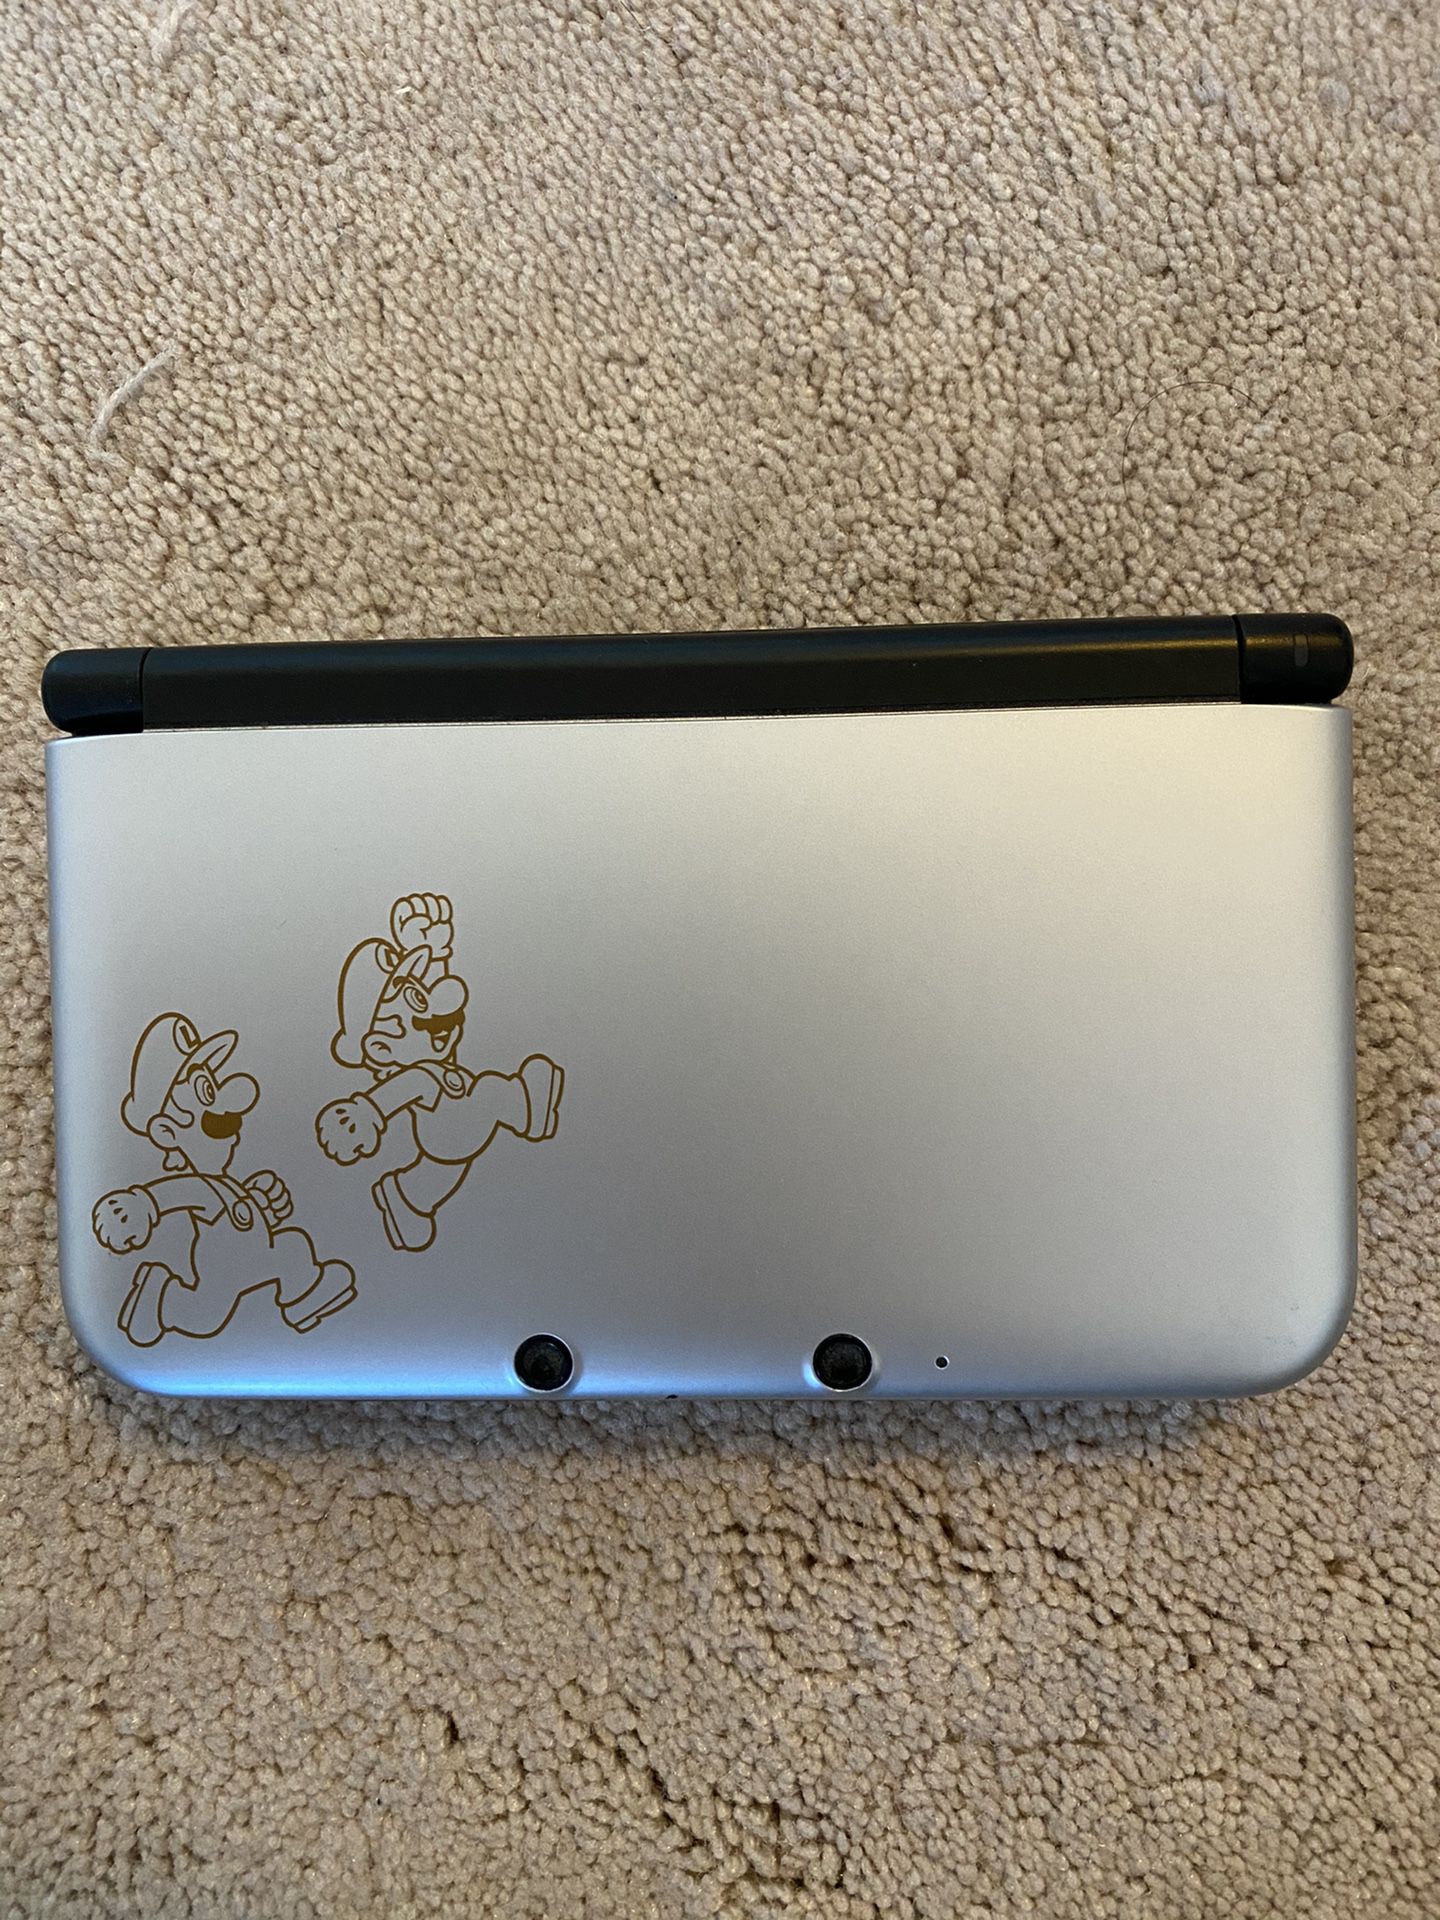 Nintendo 3DS XL Mario & Luigi Limited Edition